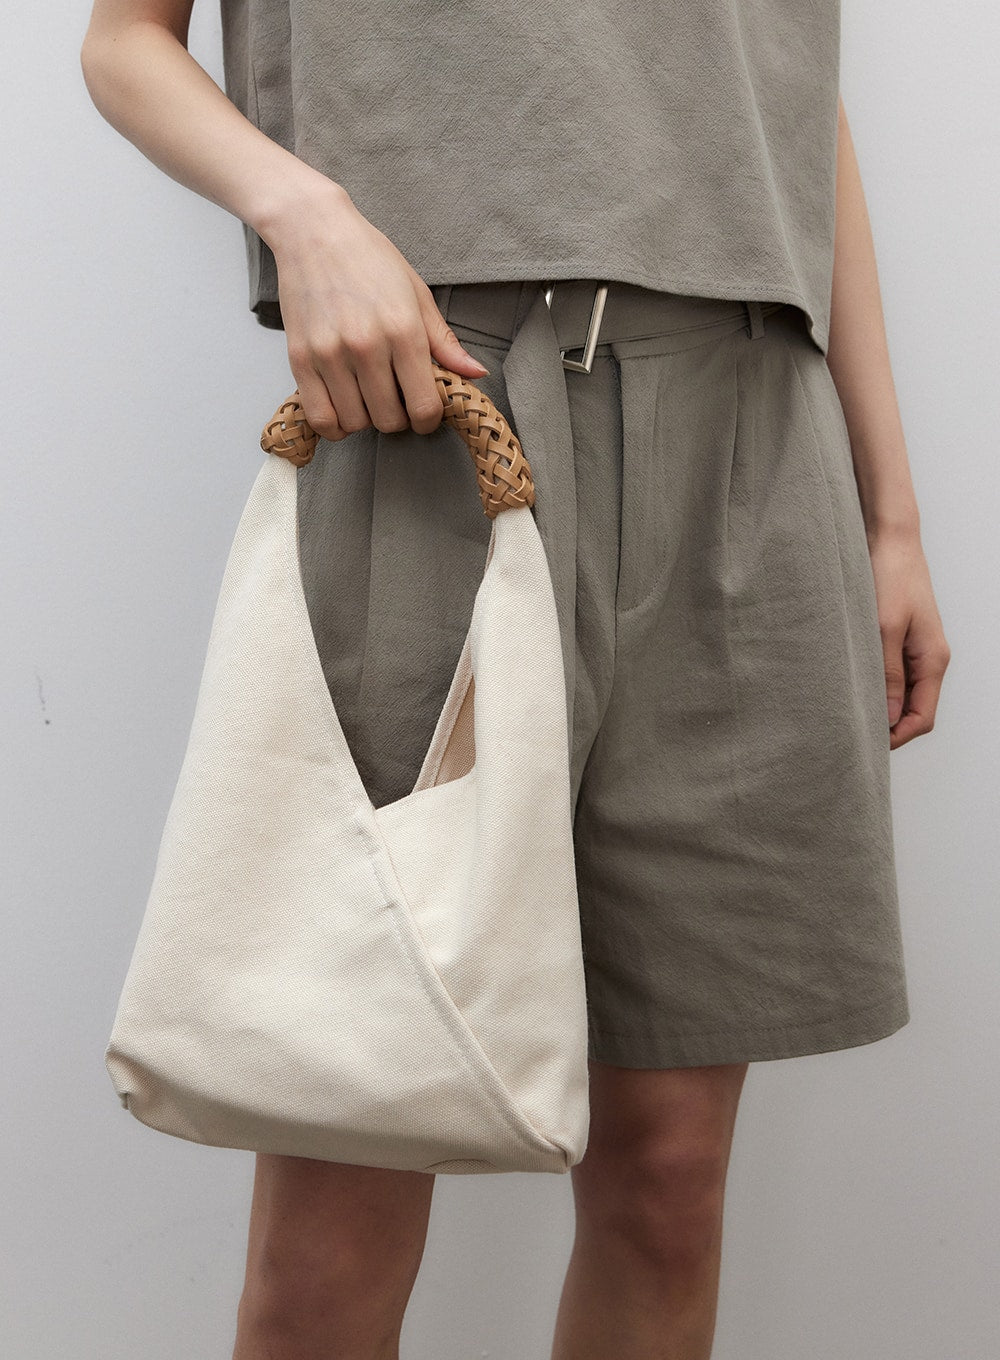 cotton-tote-bag-iy325